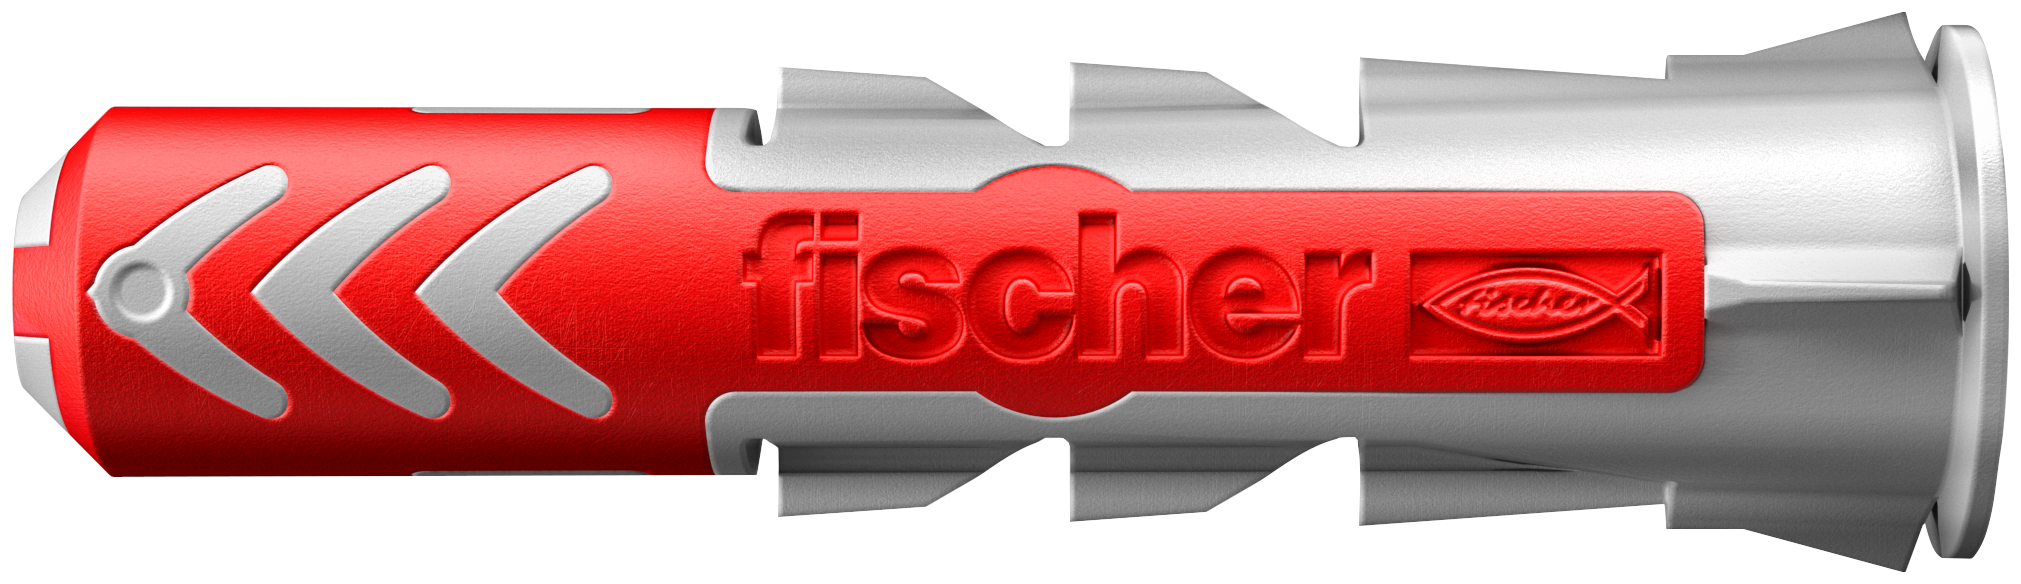 fischer Big Pack Tasselli DuoPower 6 (240 Tasselli) (240 Pz.) Busta di tasselli formato convenienza fie2859